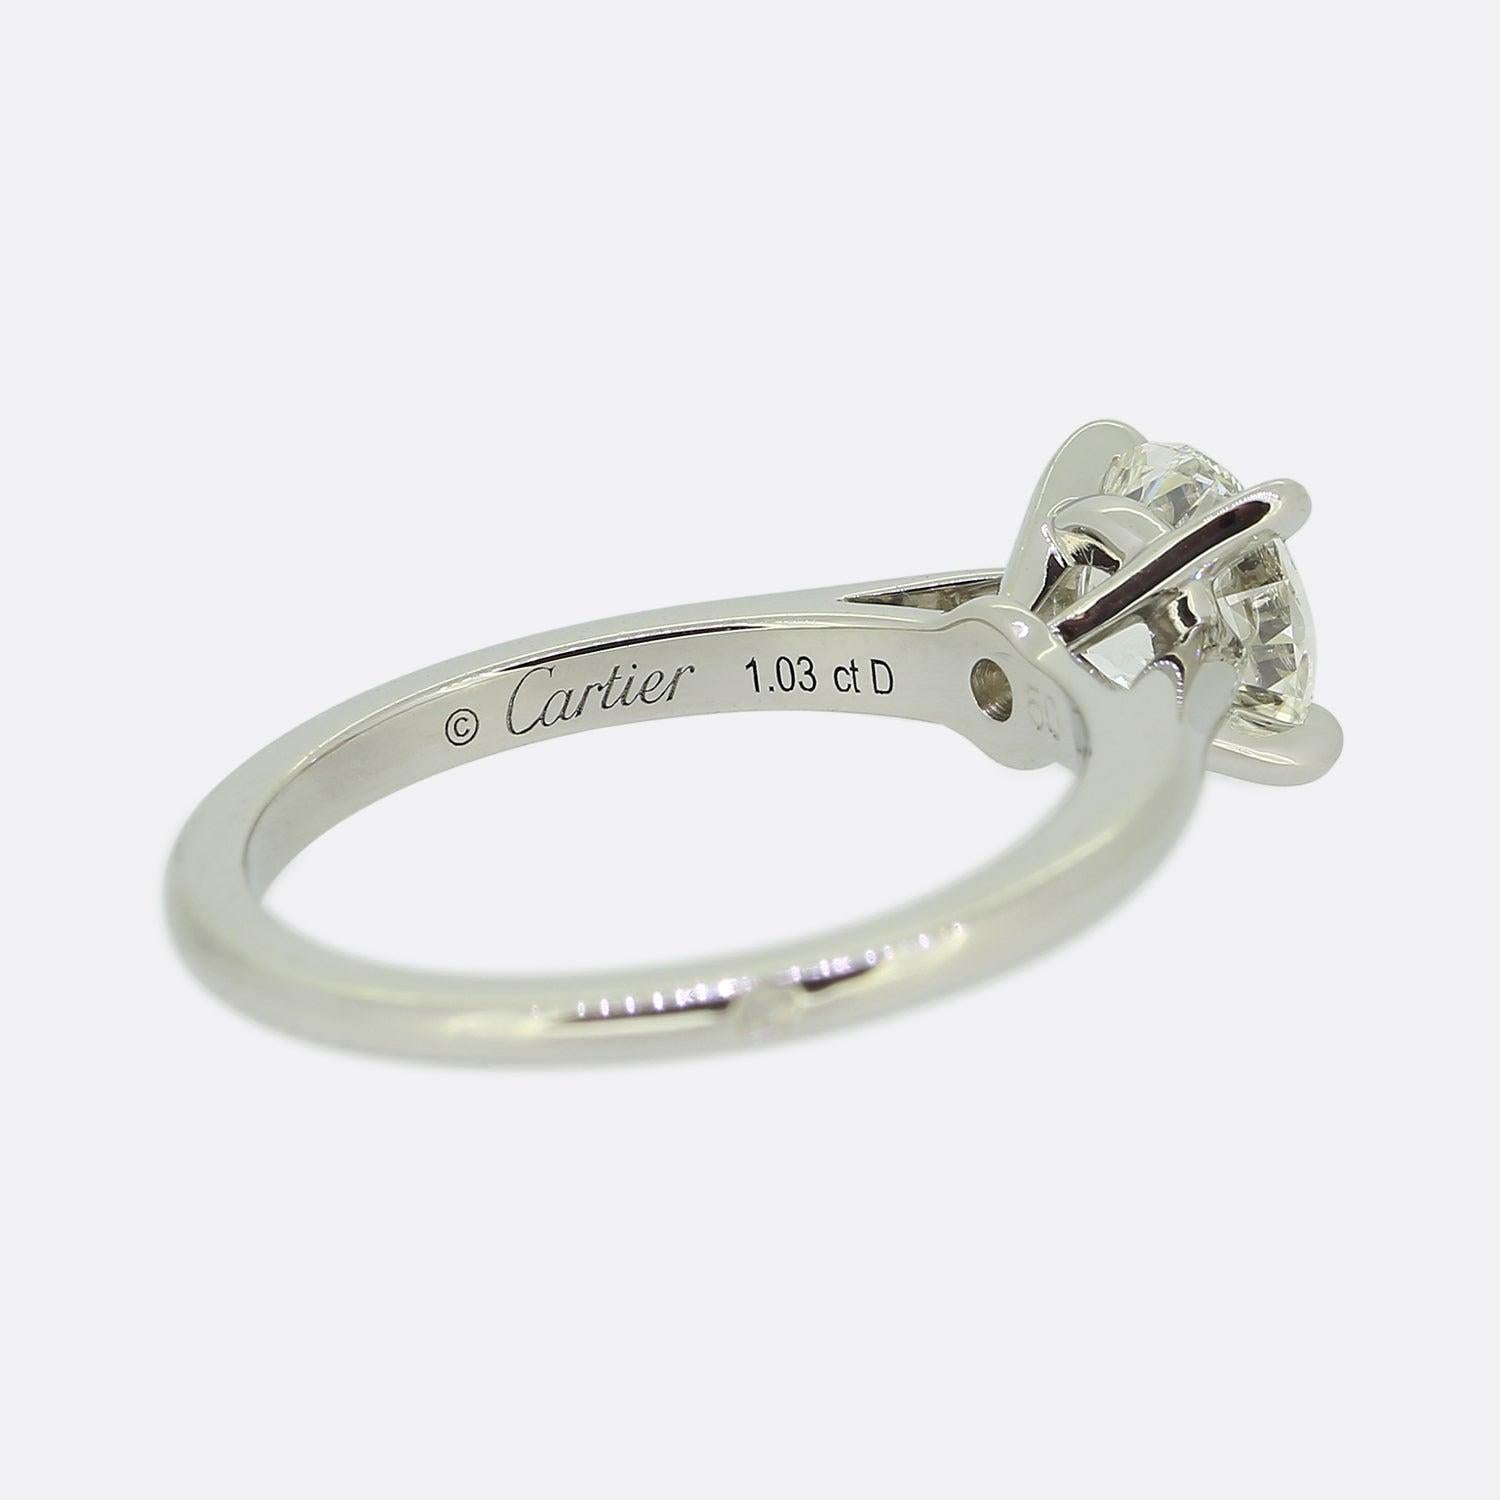 Women's Cartier 1.03 Carat Diamond Solitaire Ring For Sale